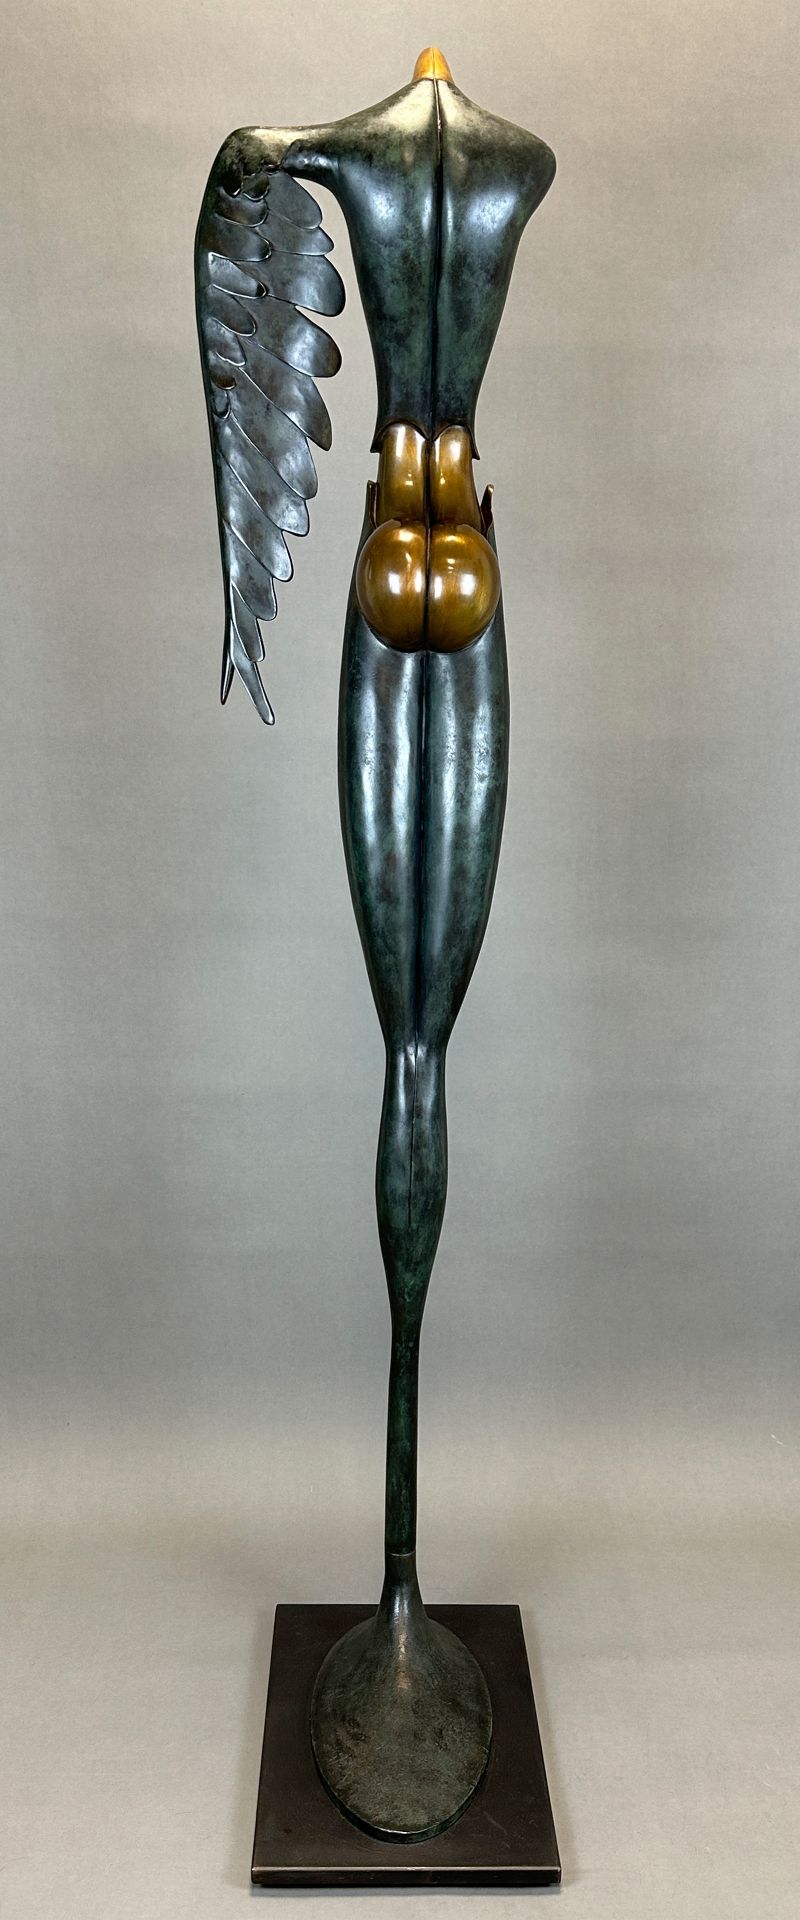 Paul WUNDERLICH (1927 - 2010). Bronze. "Large Nike". - Image 3 of 10